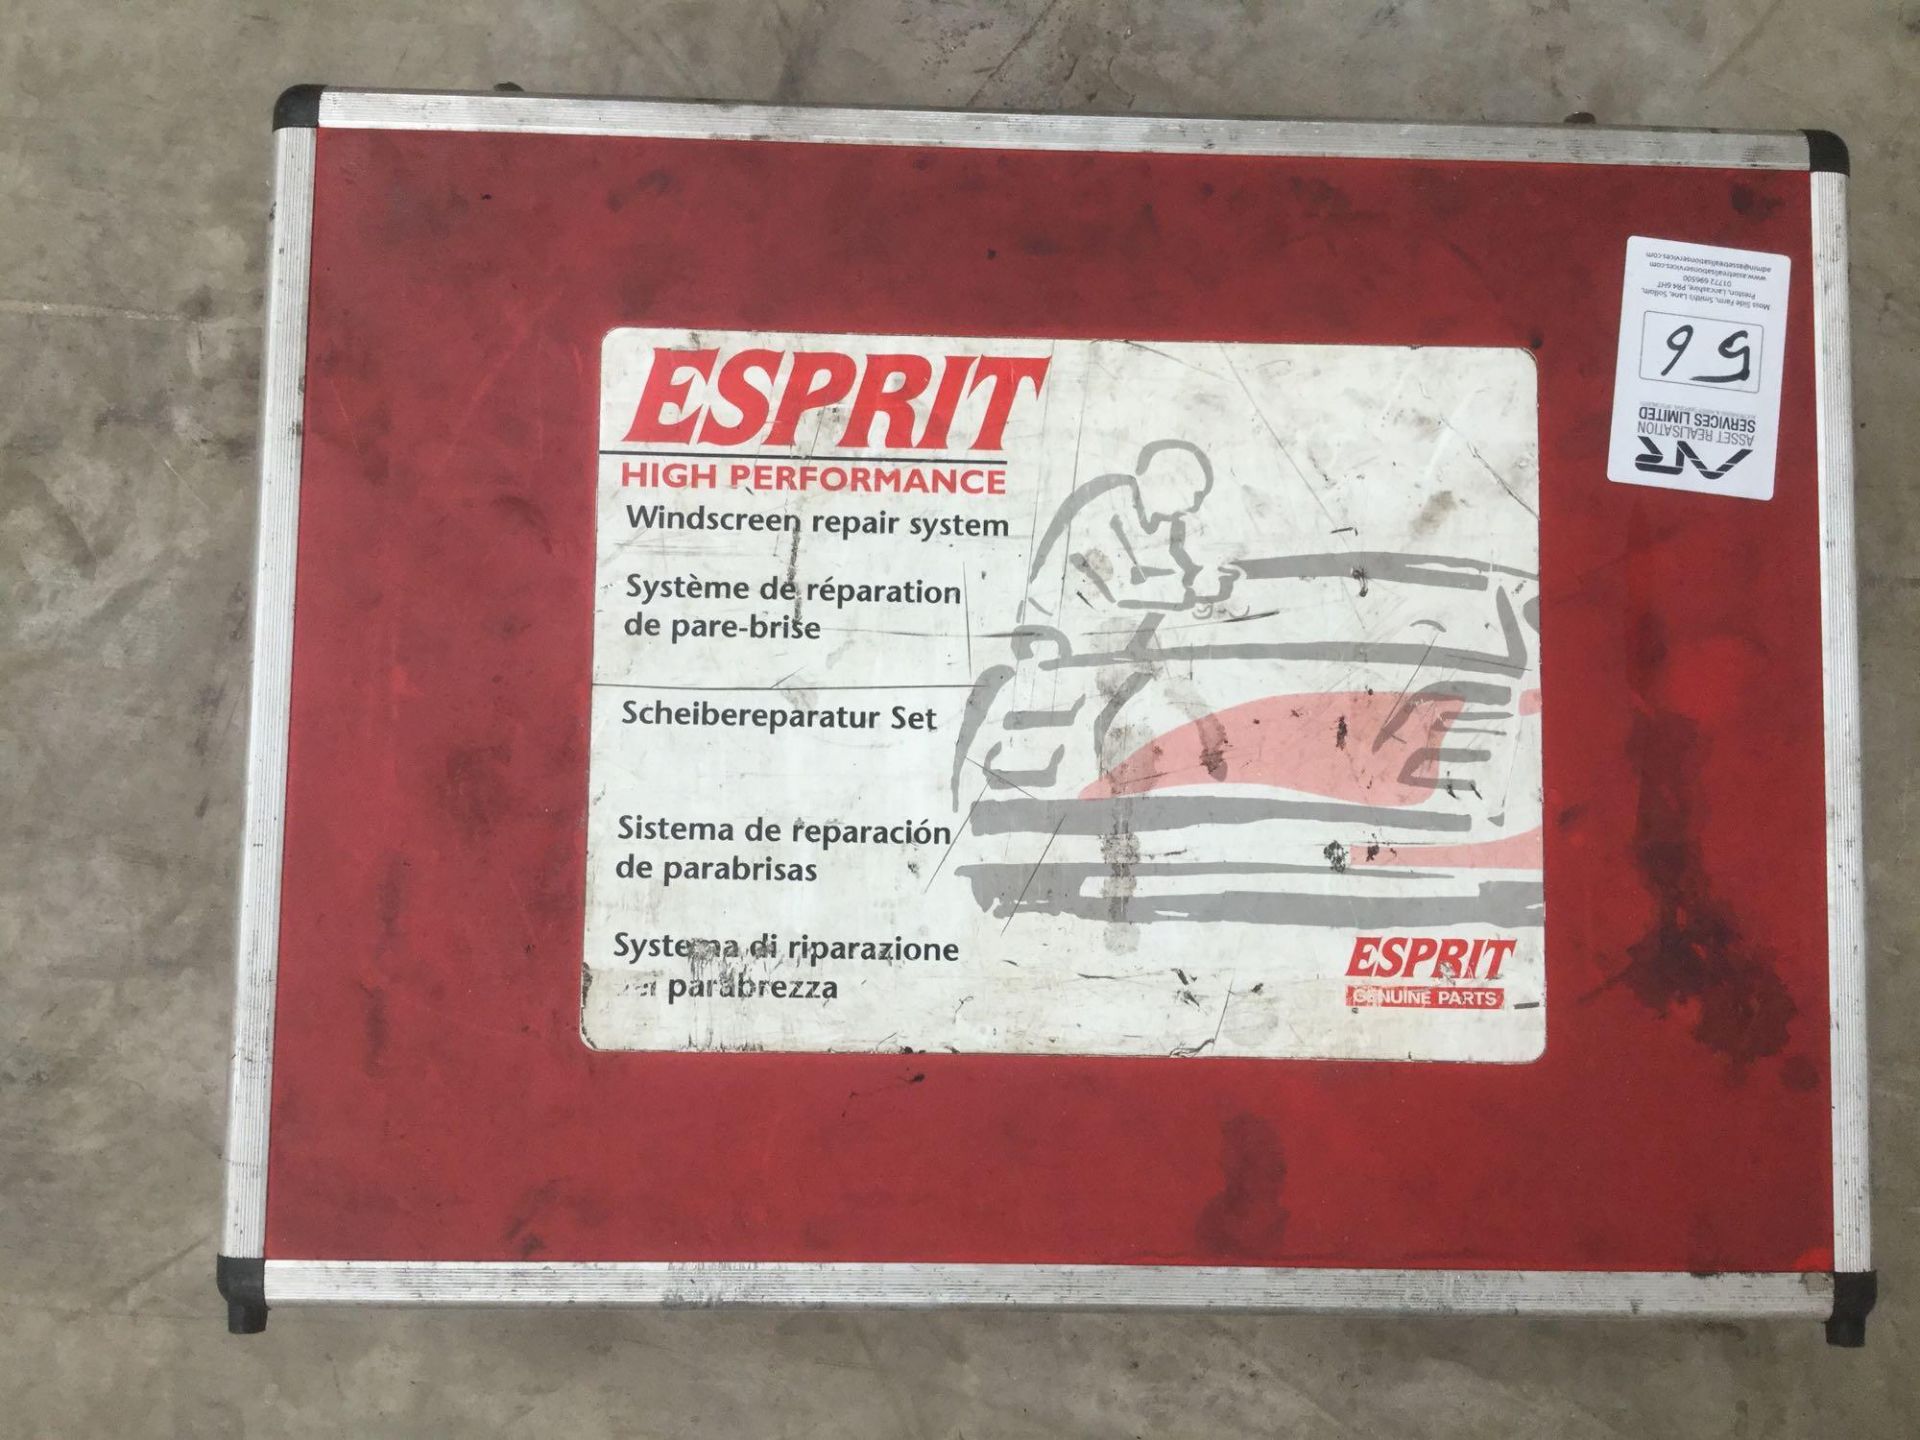 Esprit windscreen repair system